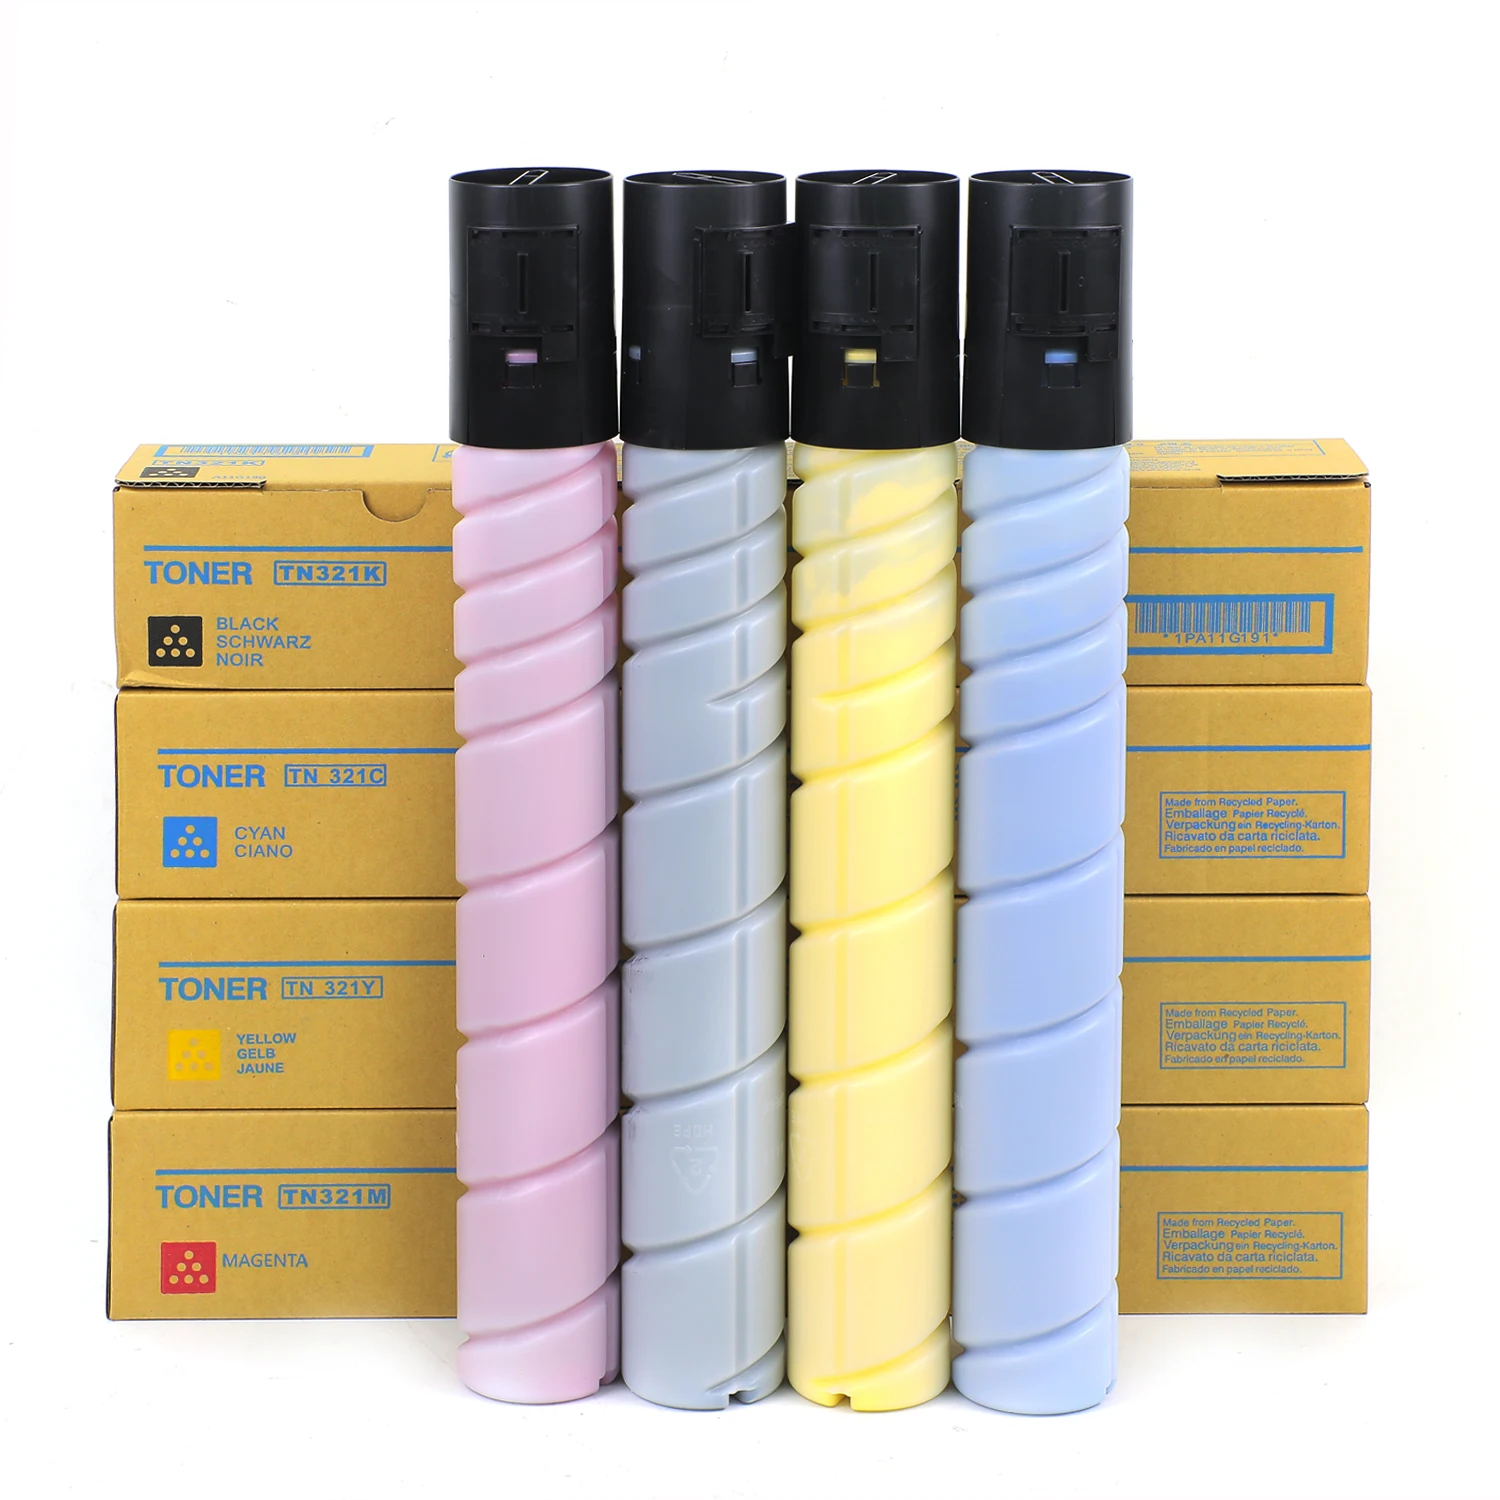 Toner Manufacturer Refill Color Toner For Use In Konica Minolta Bizhub C364 Toner Cartridge Tn321 Buy Toner Cartridge Bizhub C364 Konica Minolta Tn321 Product On Alibaba Com